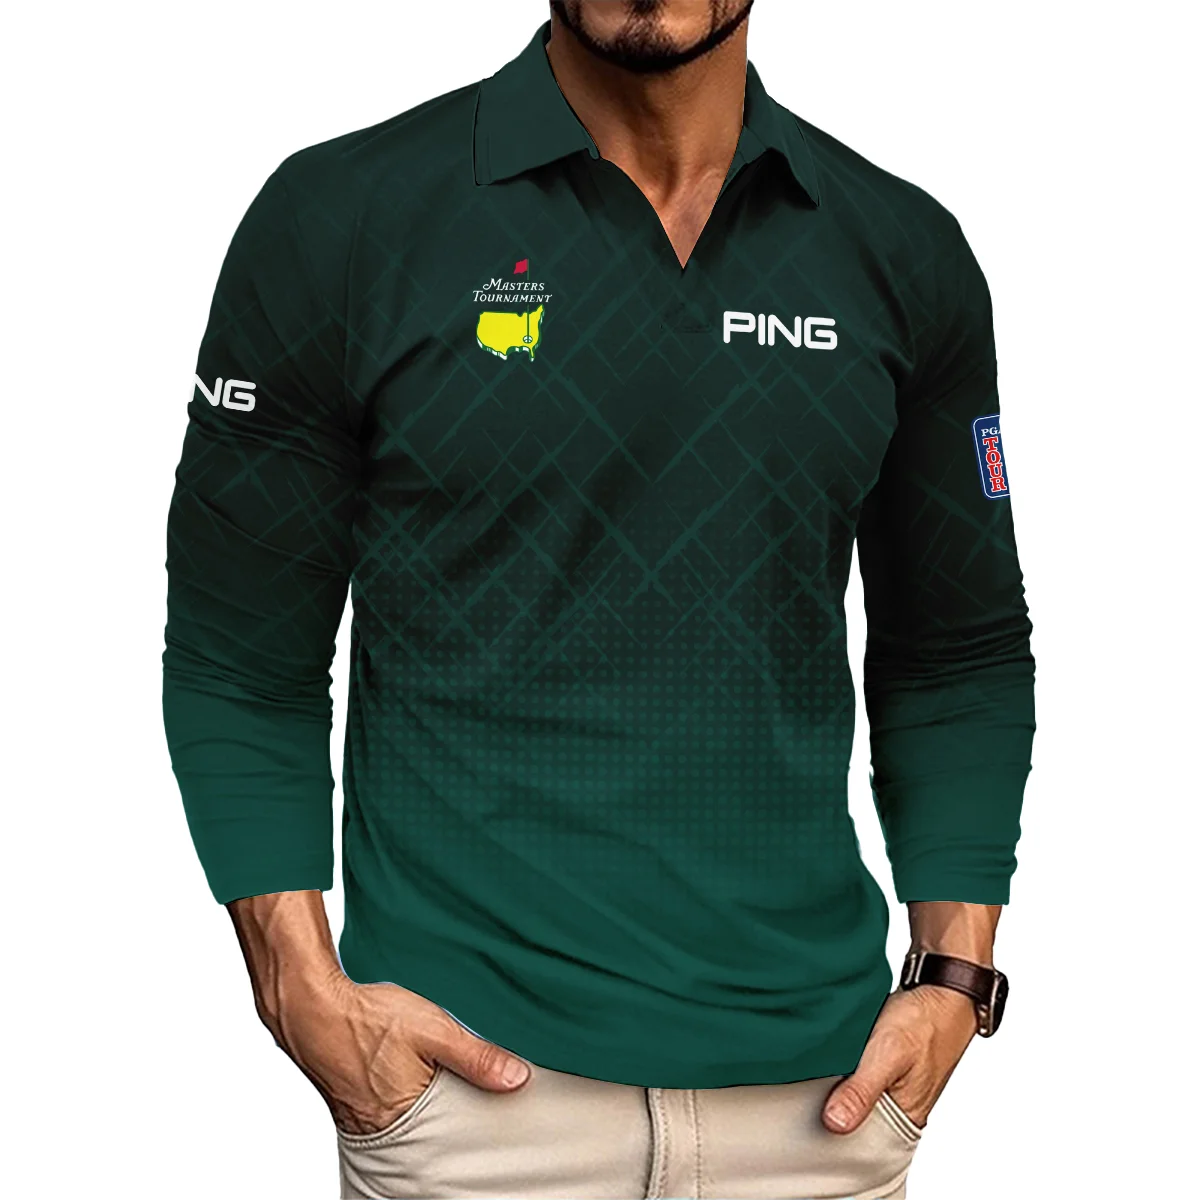 Ping Masters Tournament Sport Jersey Pattern Dark Green Sleeveless Jacket Style Classic Sleeveless Jacket